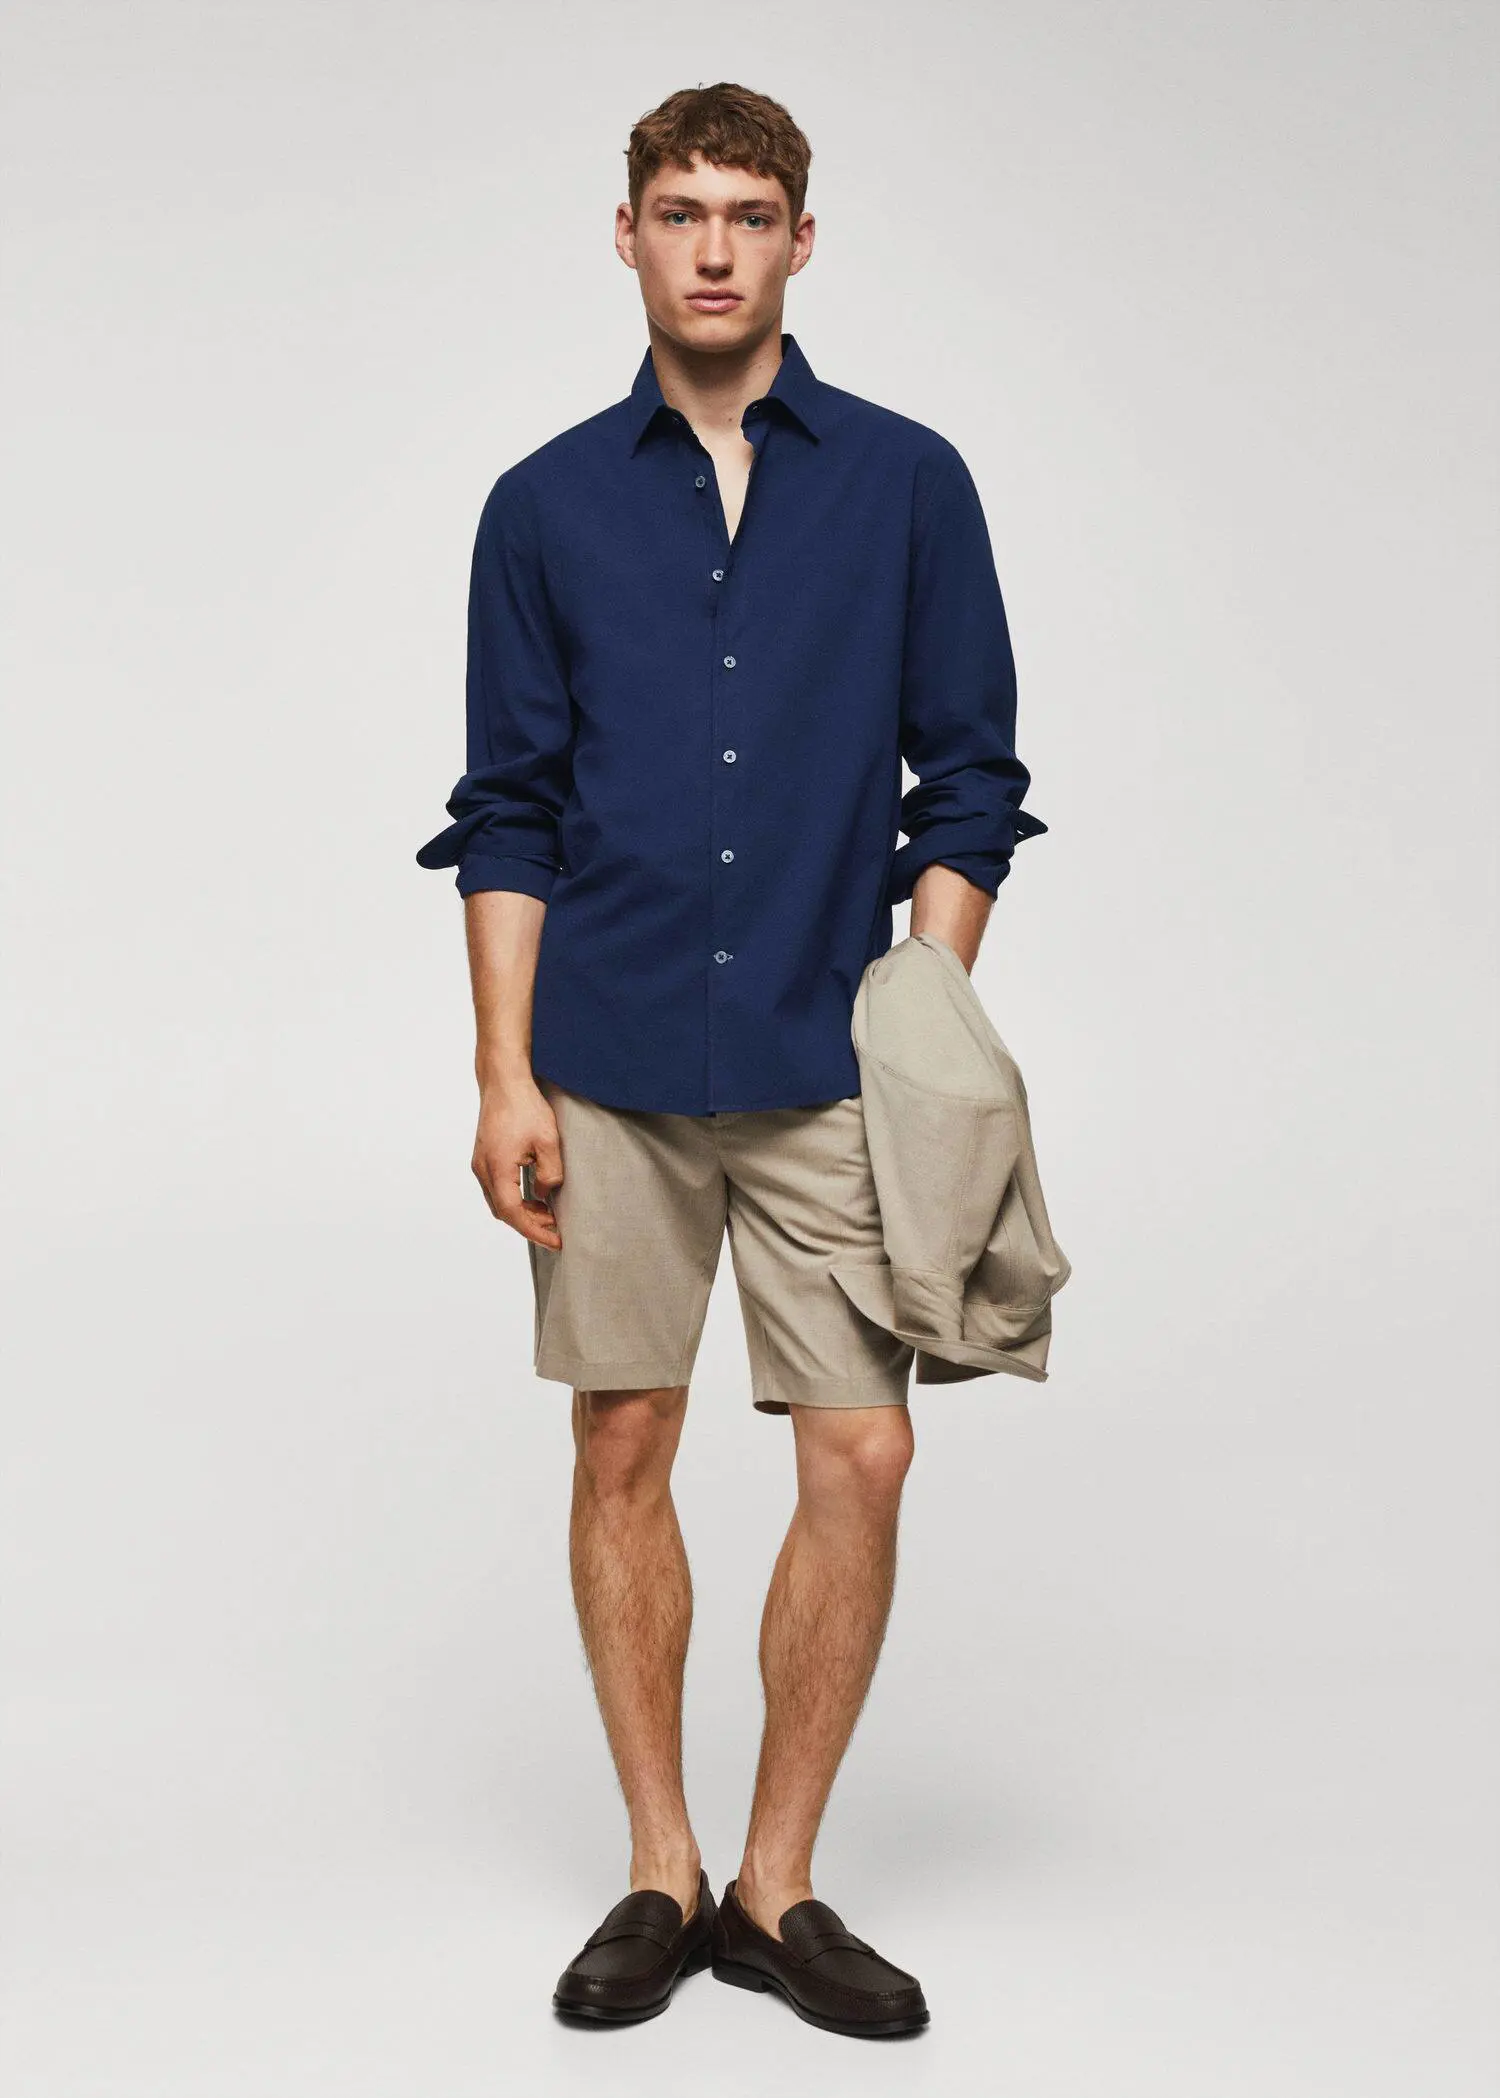 Mango Slim-fit cotton seersucker shirt. a man in a blue shirt and shorts. 